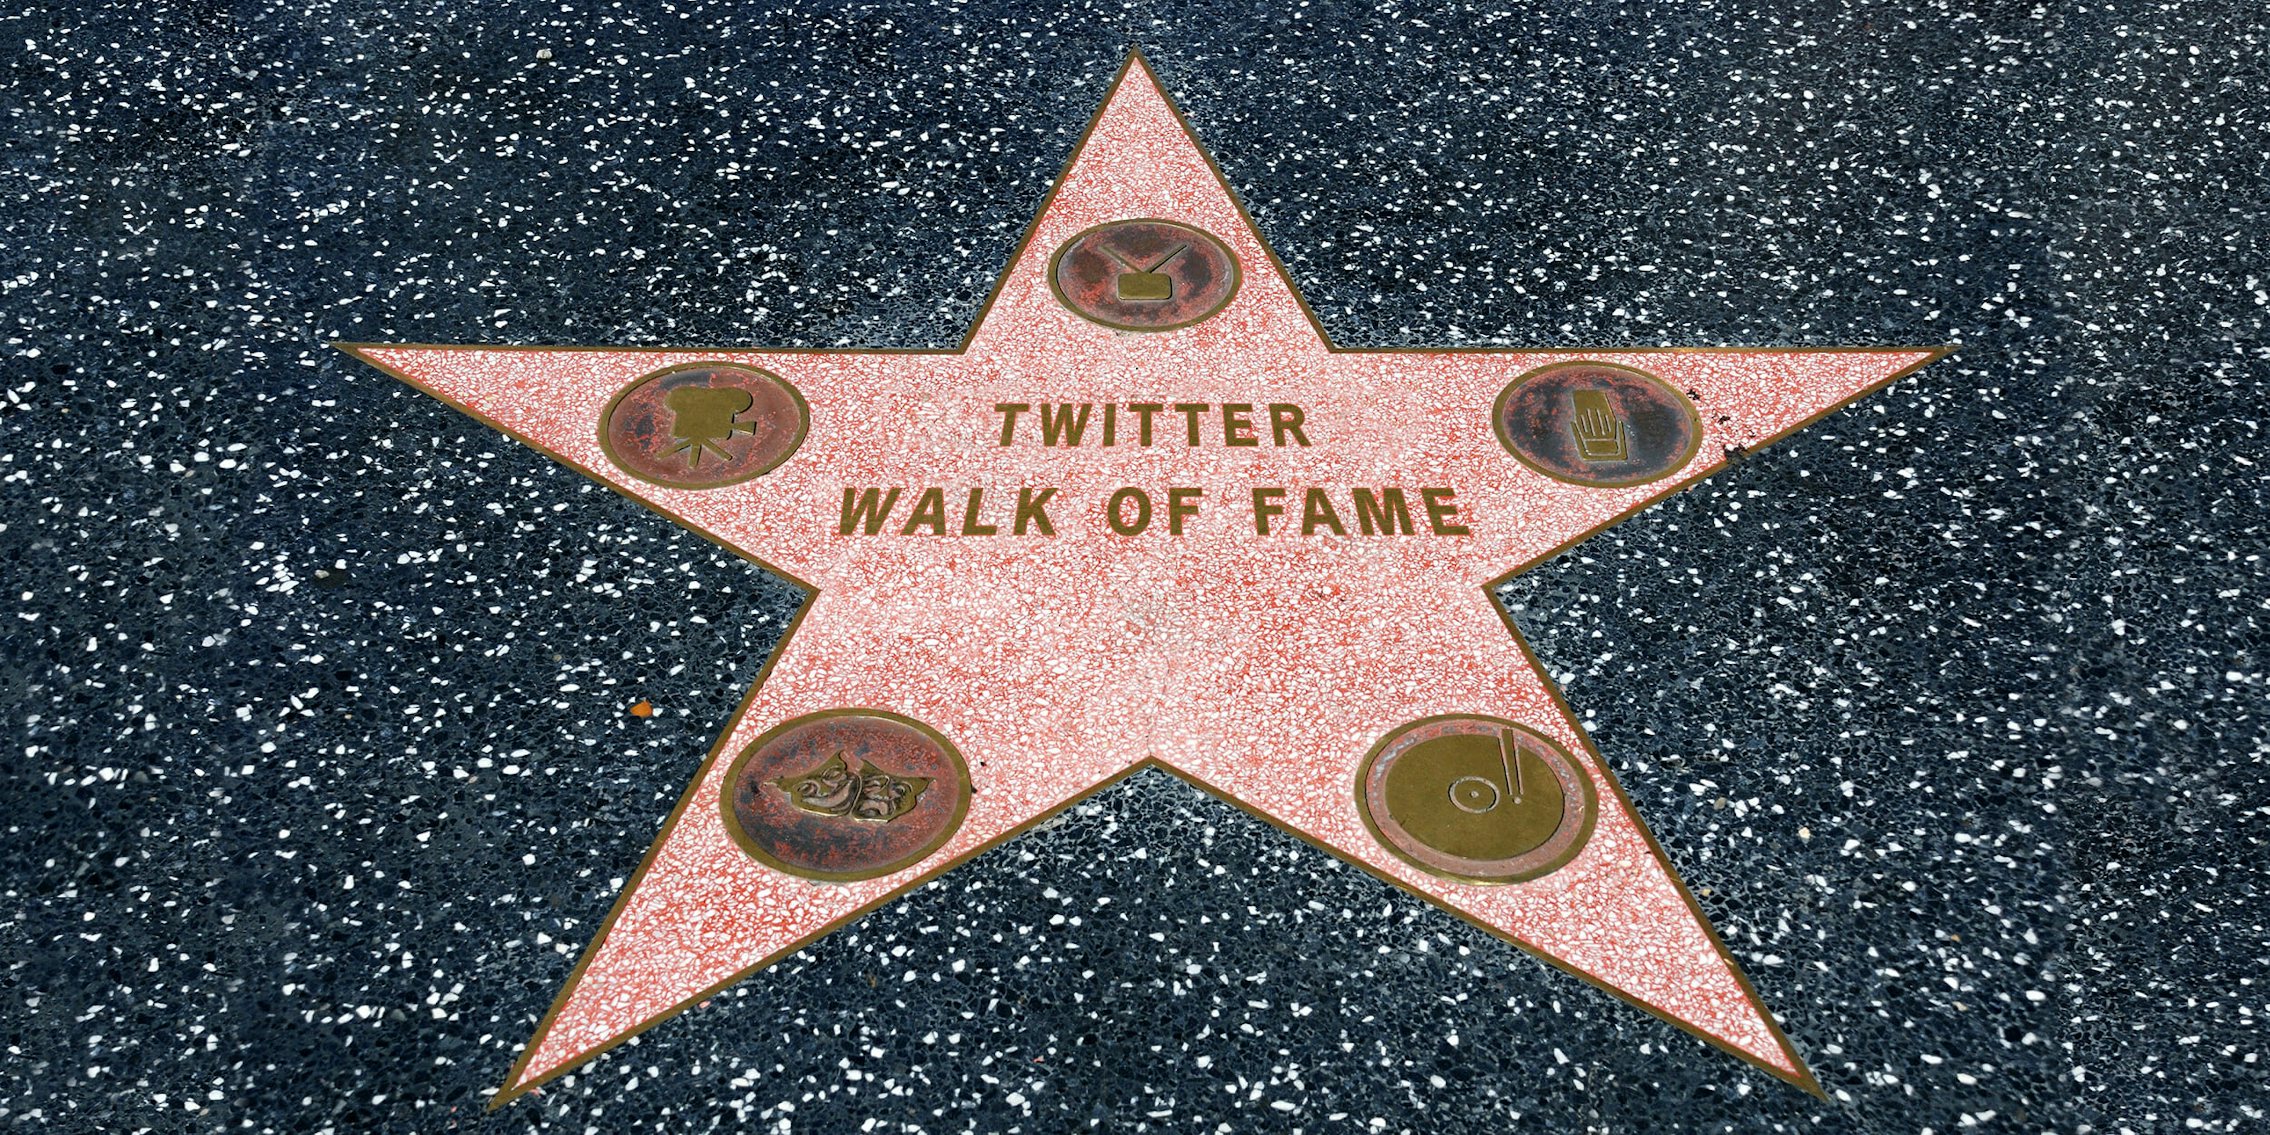 Twitter Walk of Fame star